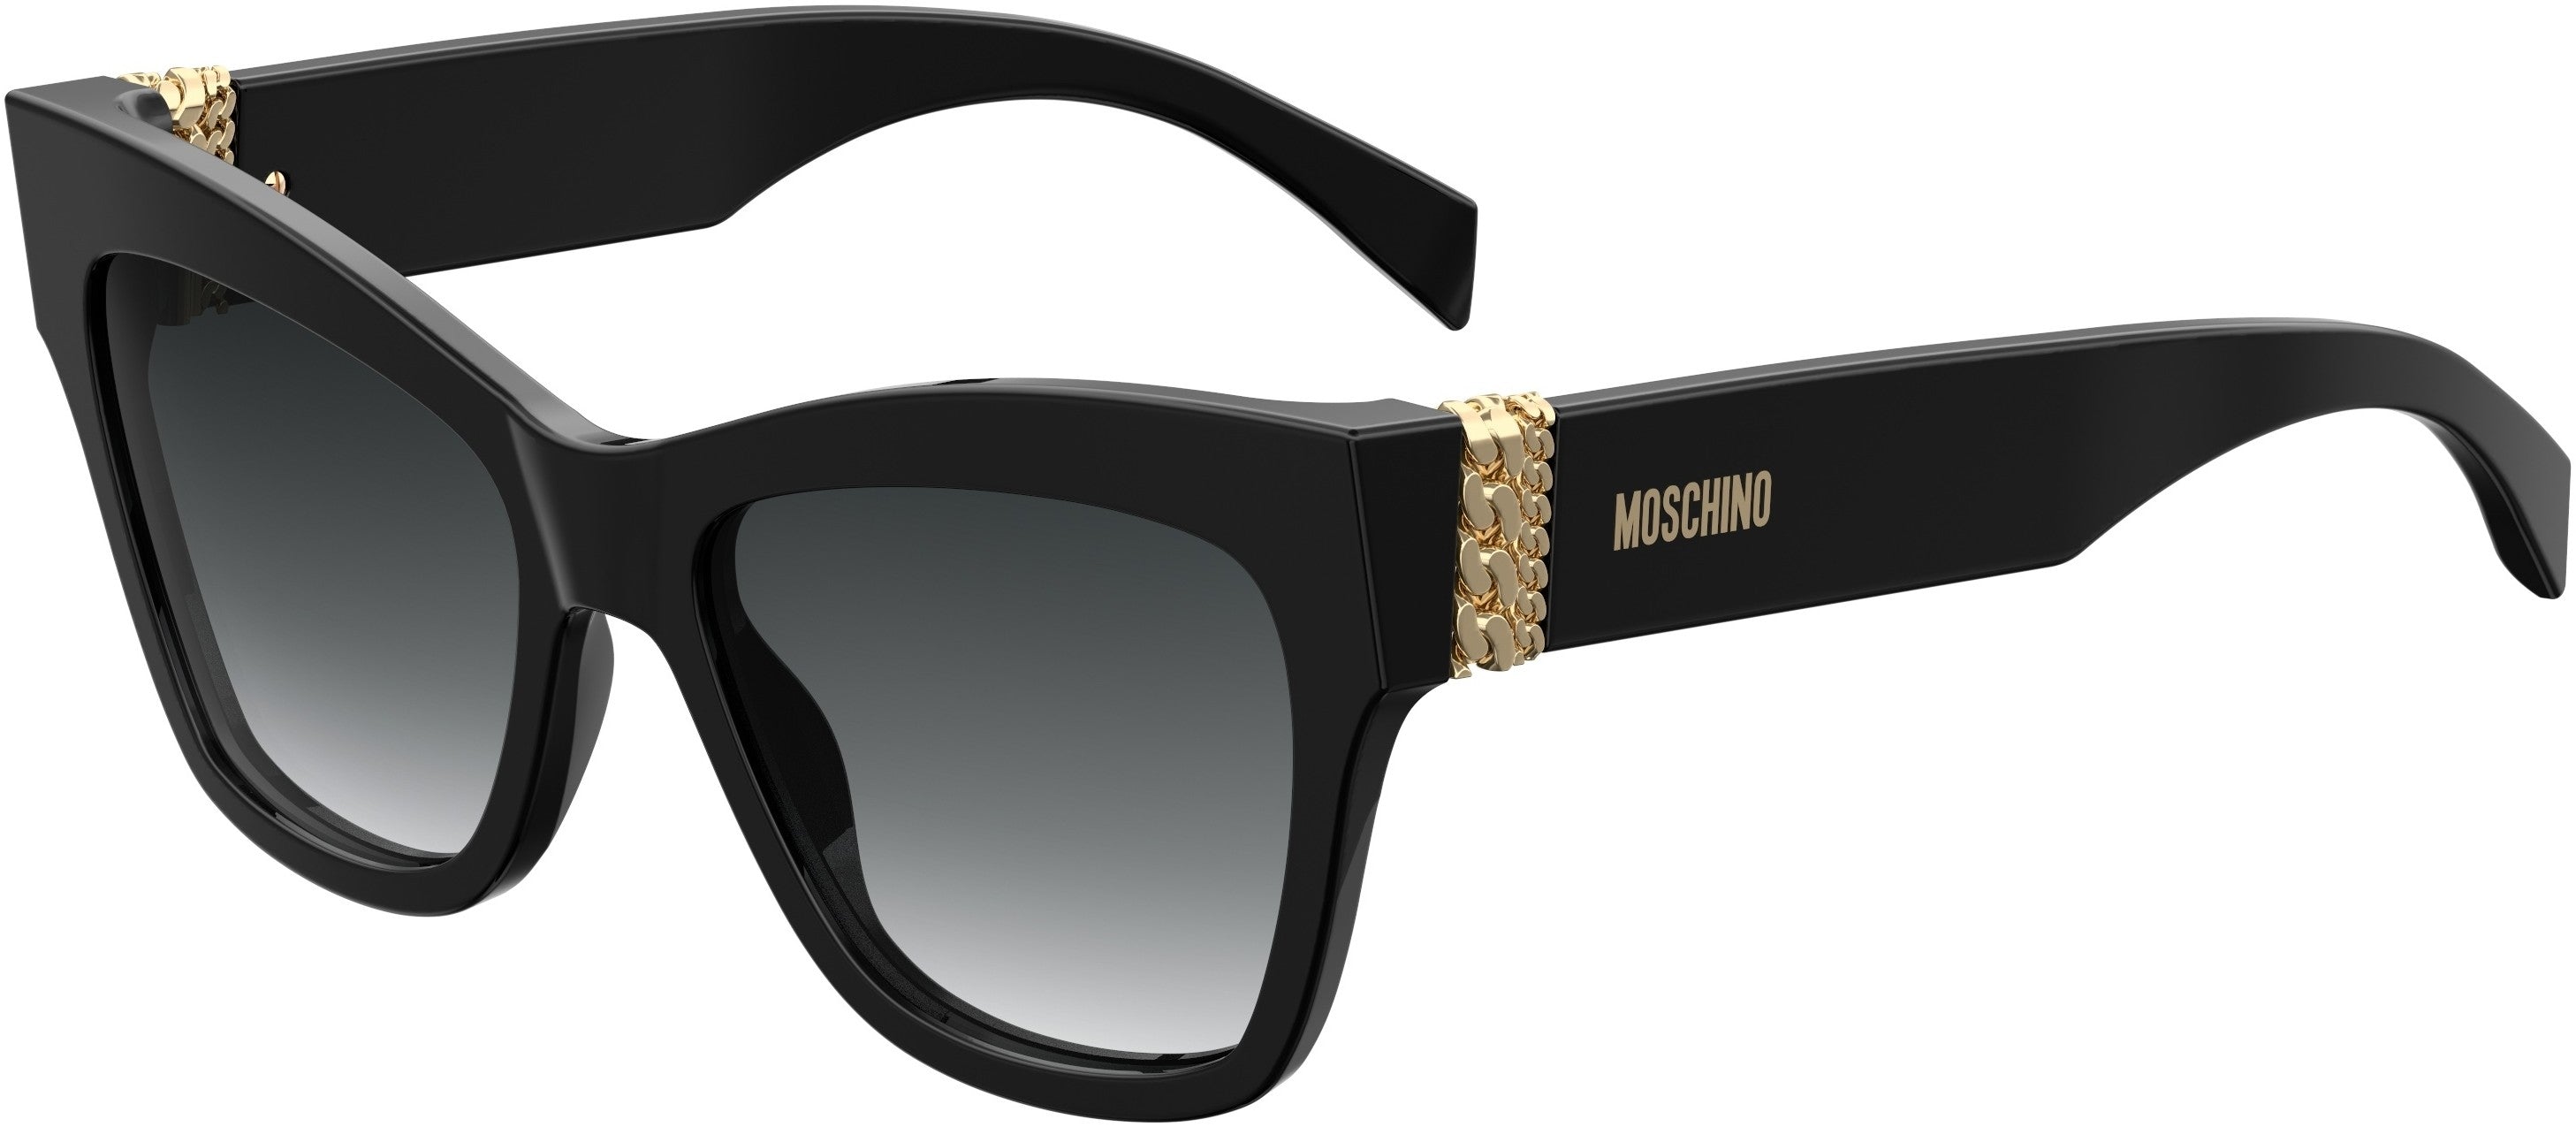  Moschino 011/S Cat Eye/butterfly Sunglasses 0807-0807  Black (9O Dark Gray Gradient)